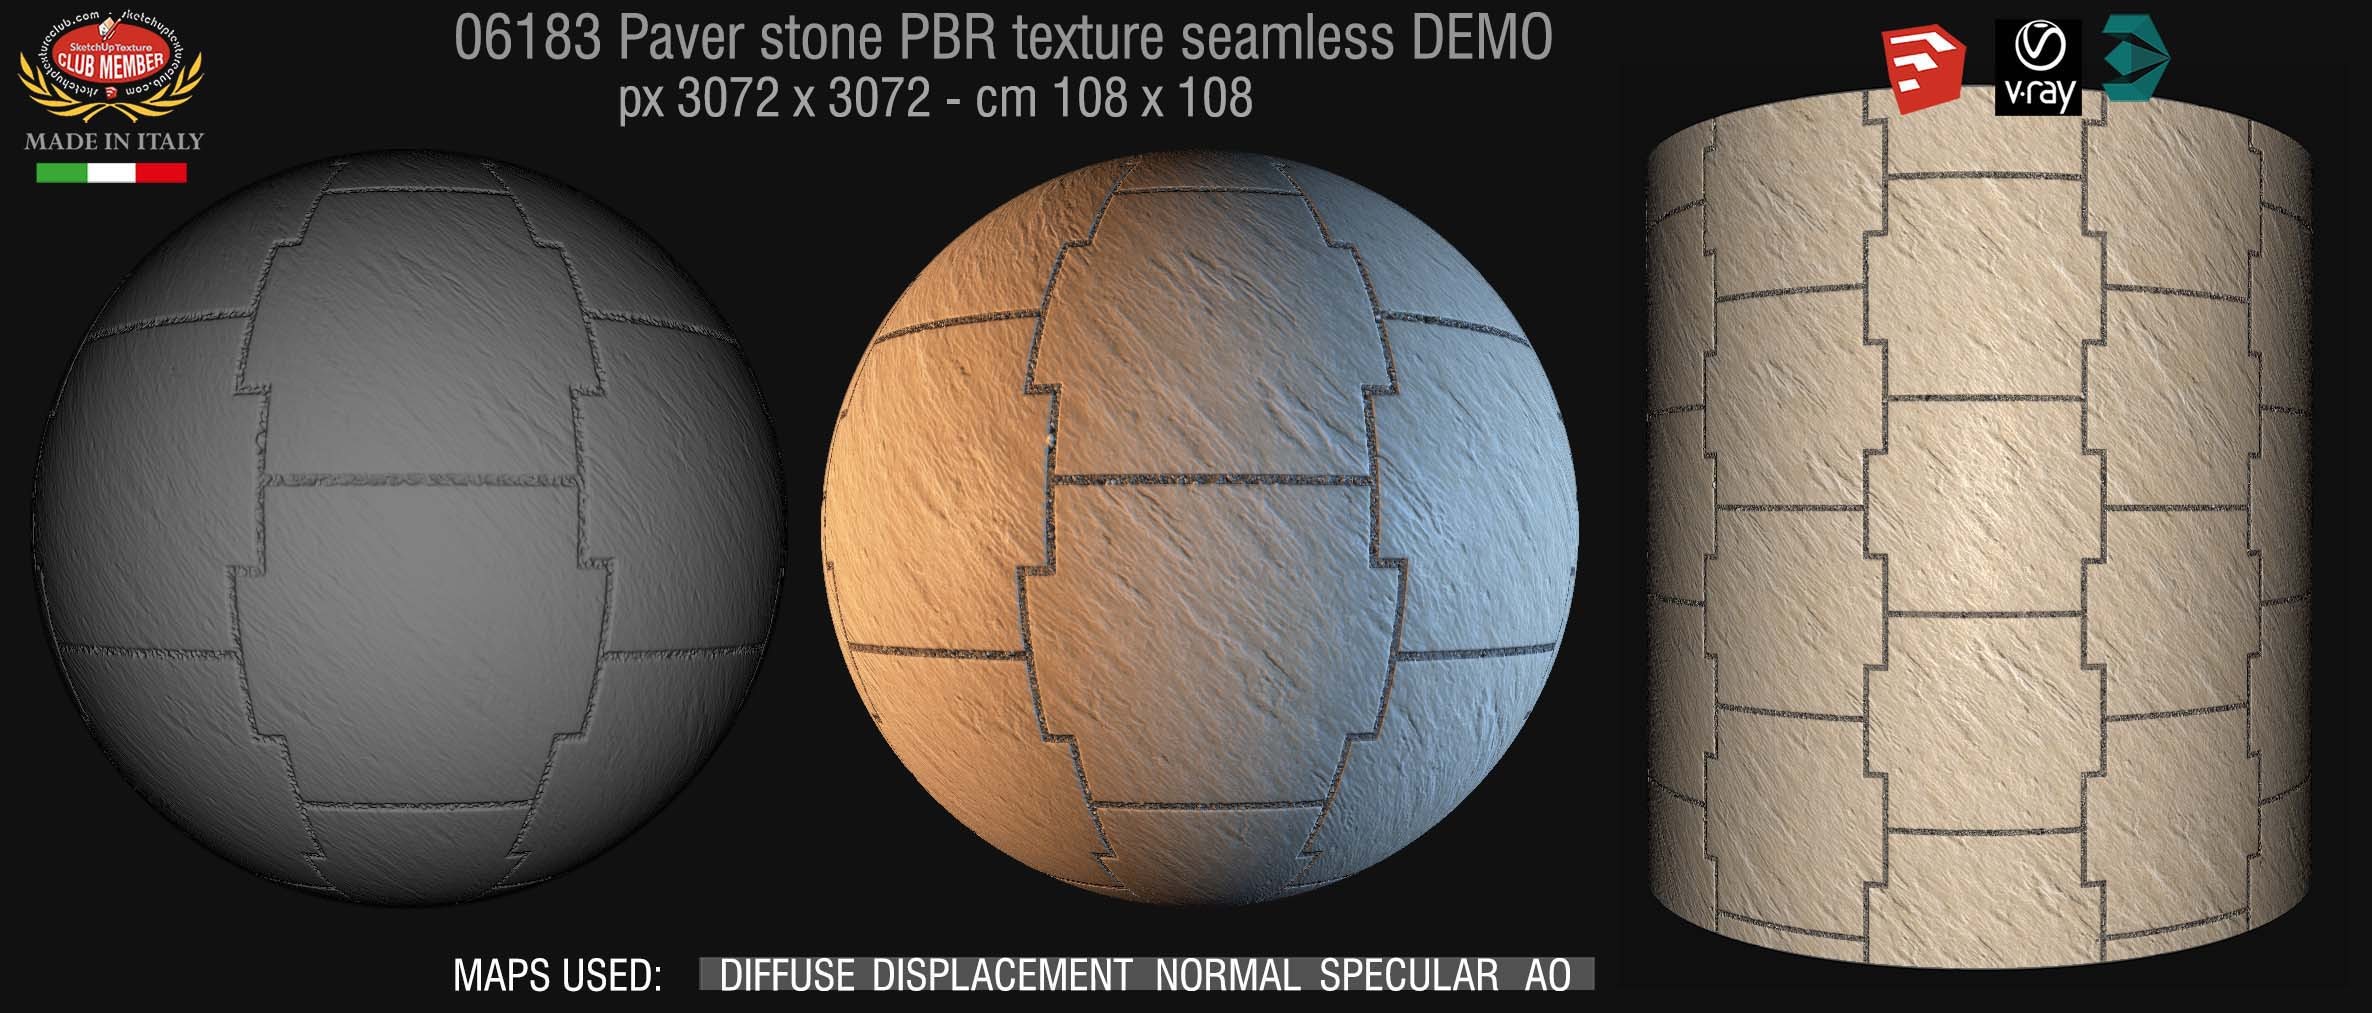 06183 paver stone - PBR texture seamless DEMO